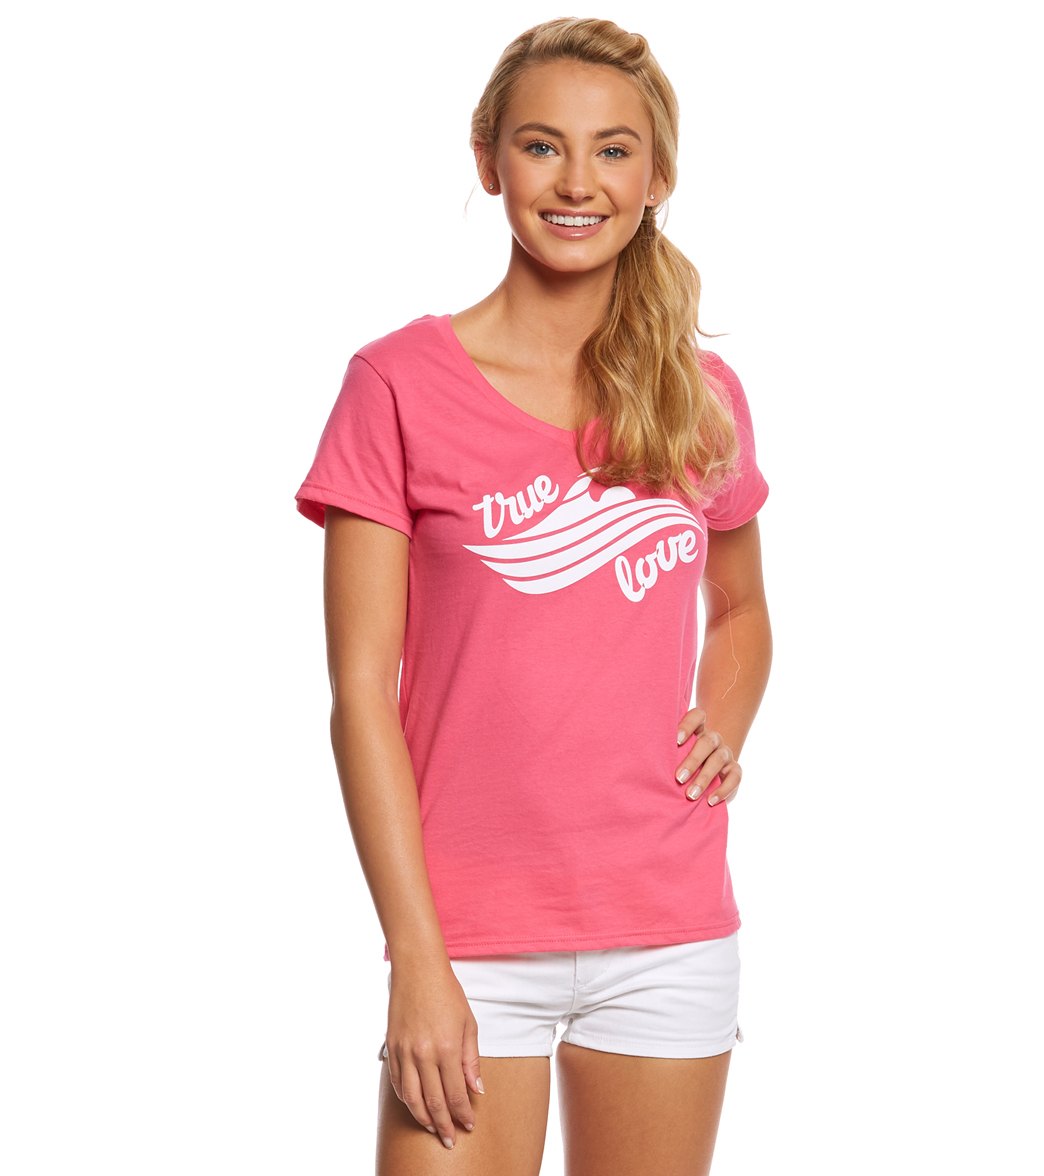 U.s. Masters Swimming Usms Women's True Love V-Neck Tee Shirt - Pink Medium Cotton - Swimoutlet.com